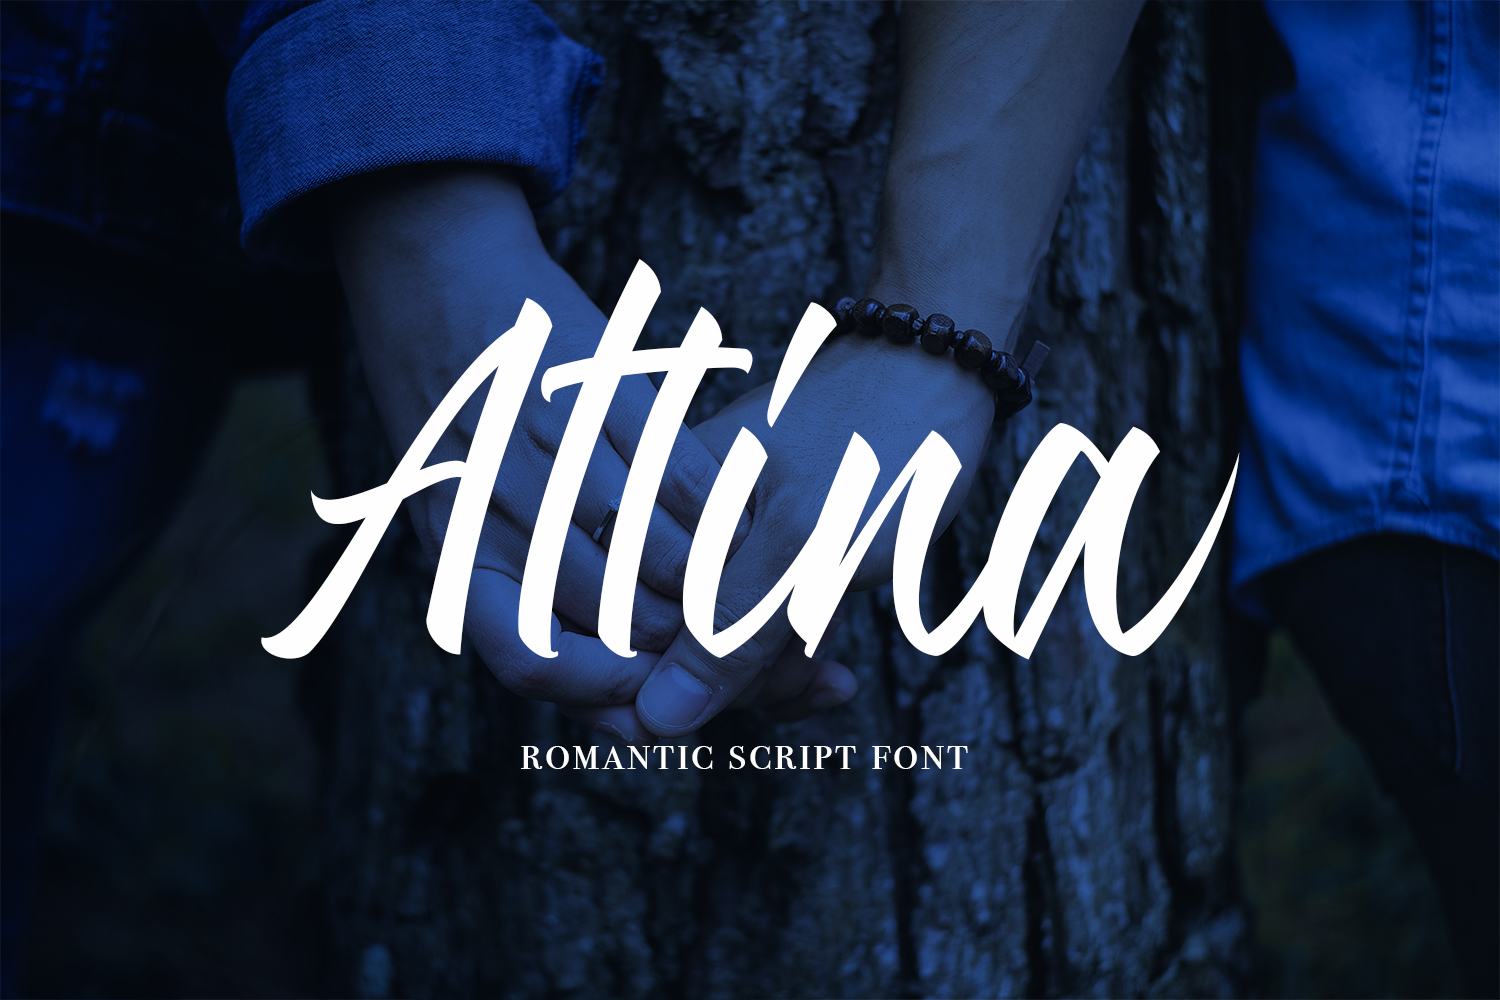 Download Free Download Attina Free Font Fontsme Com Fonts Typography